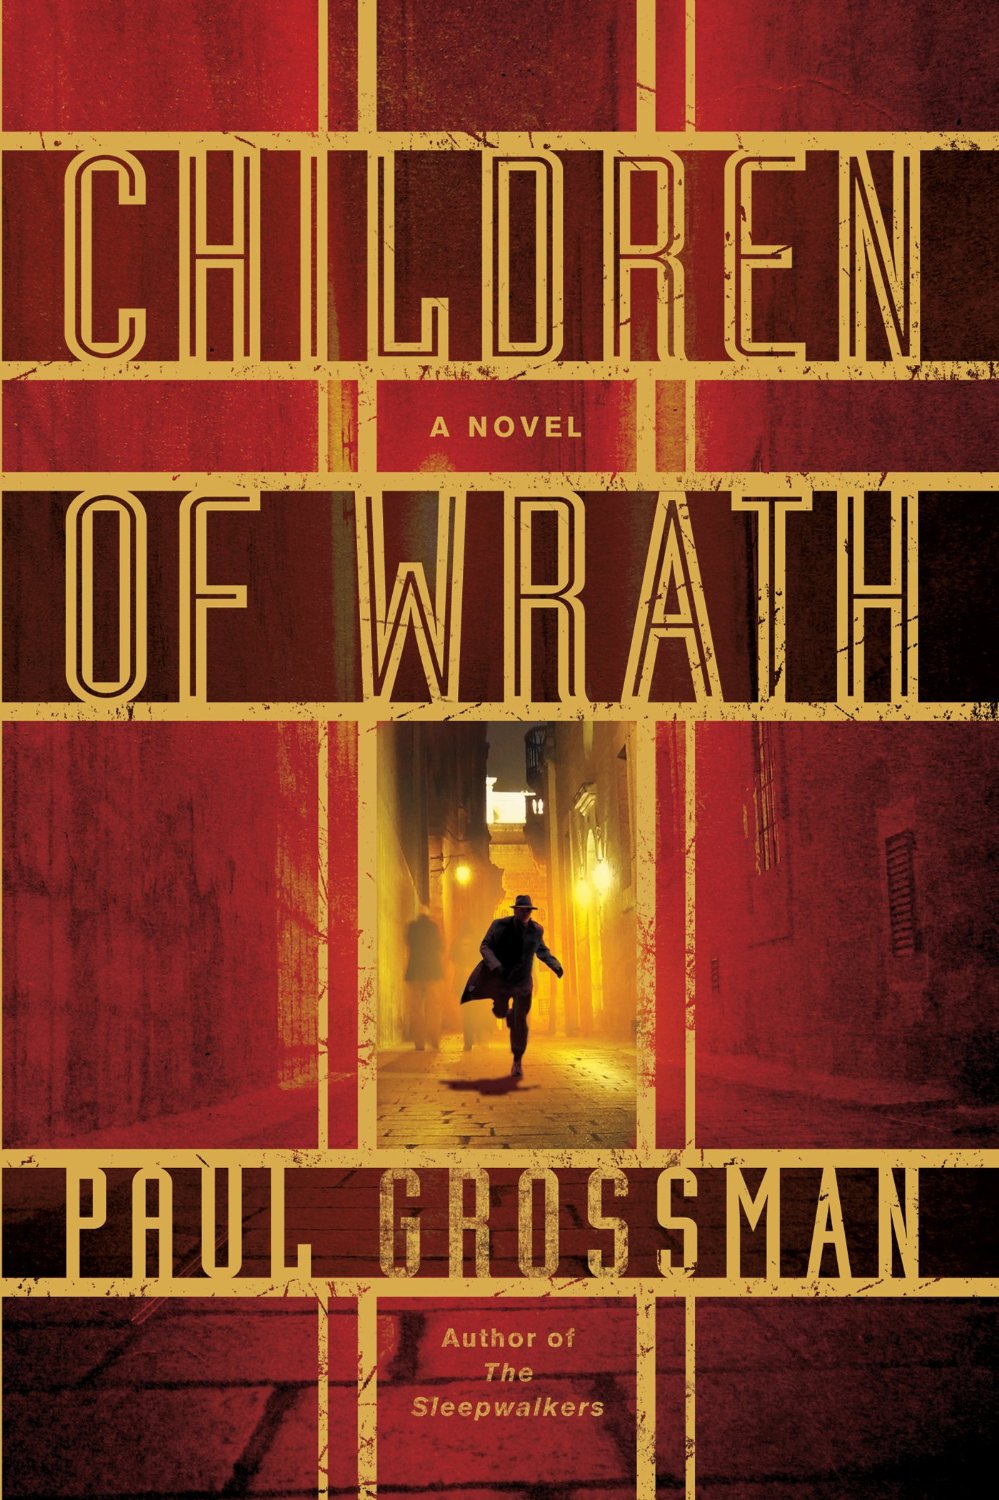 Children of Wrath by Paul Grossman